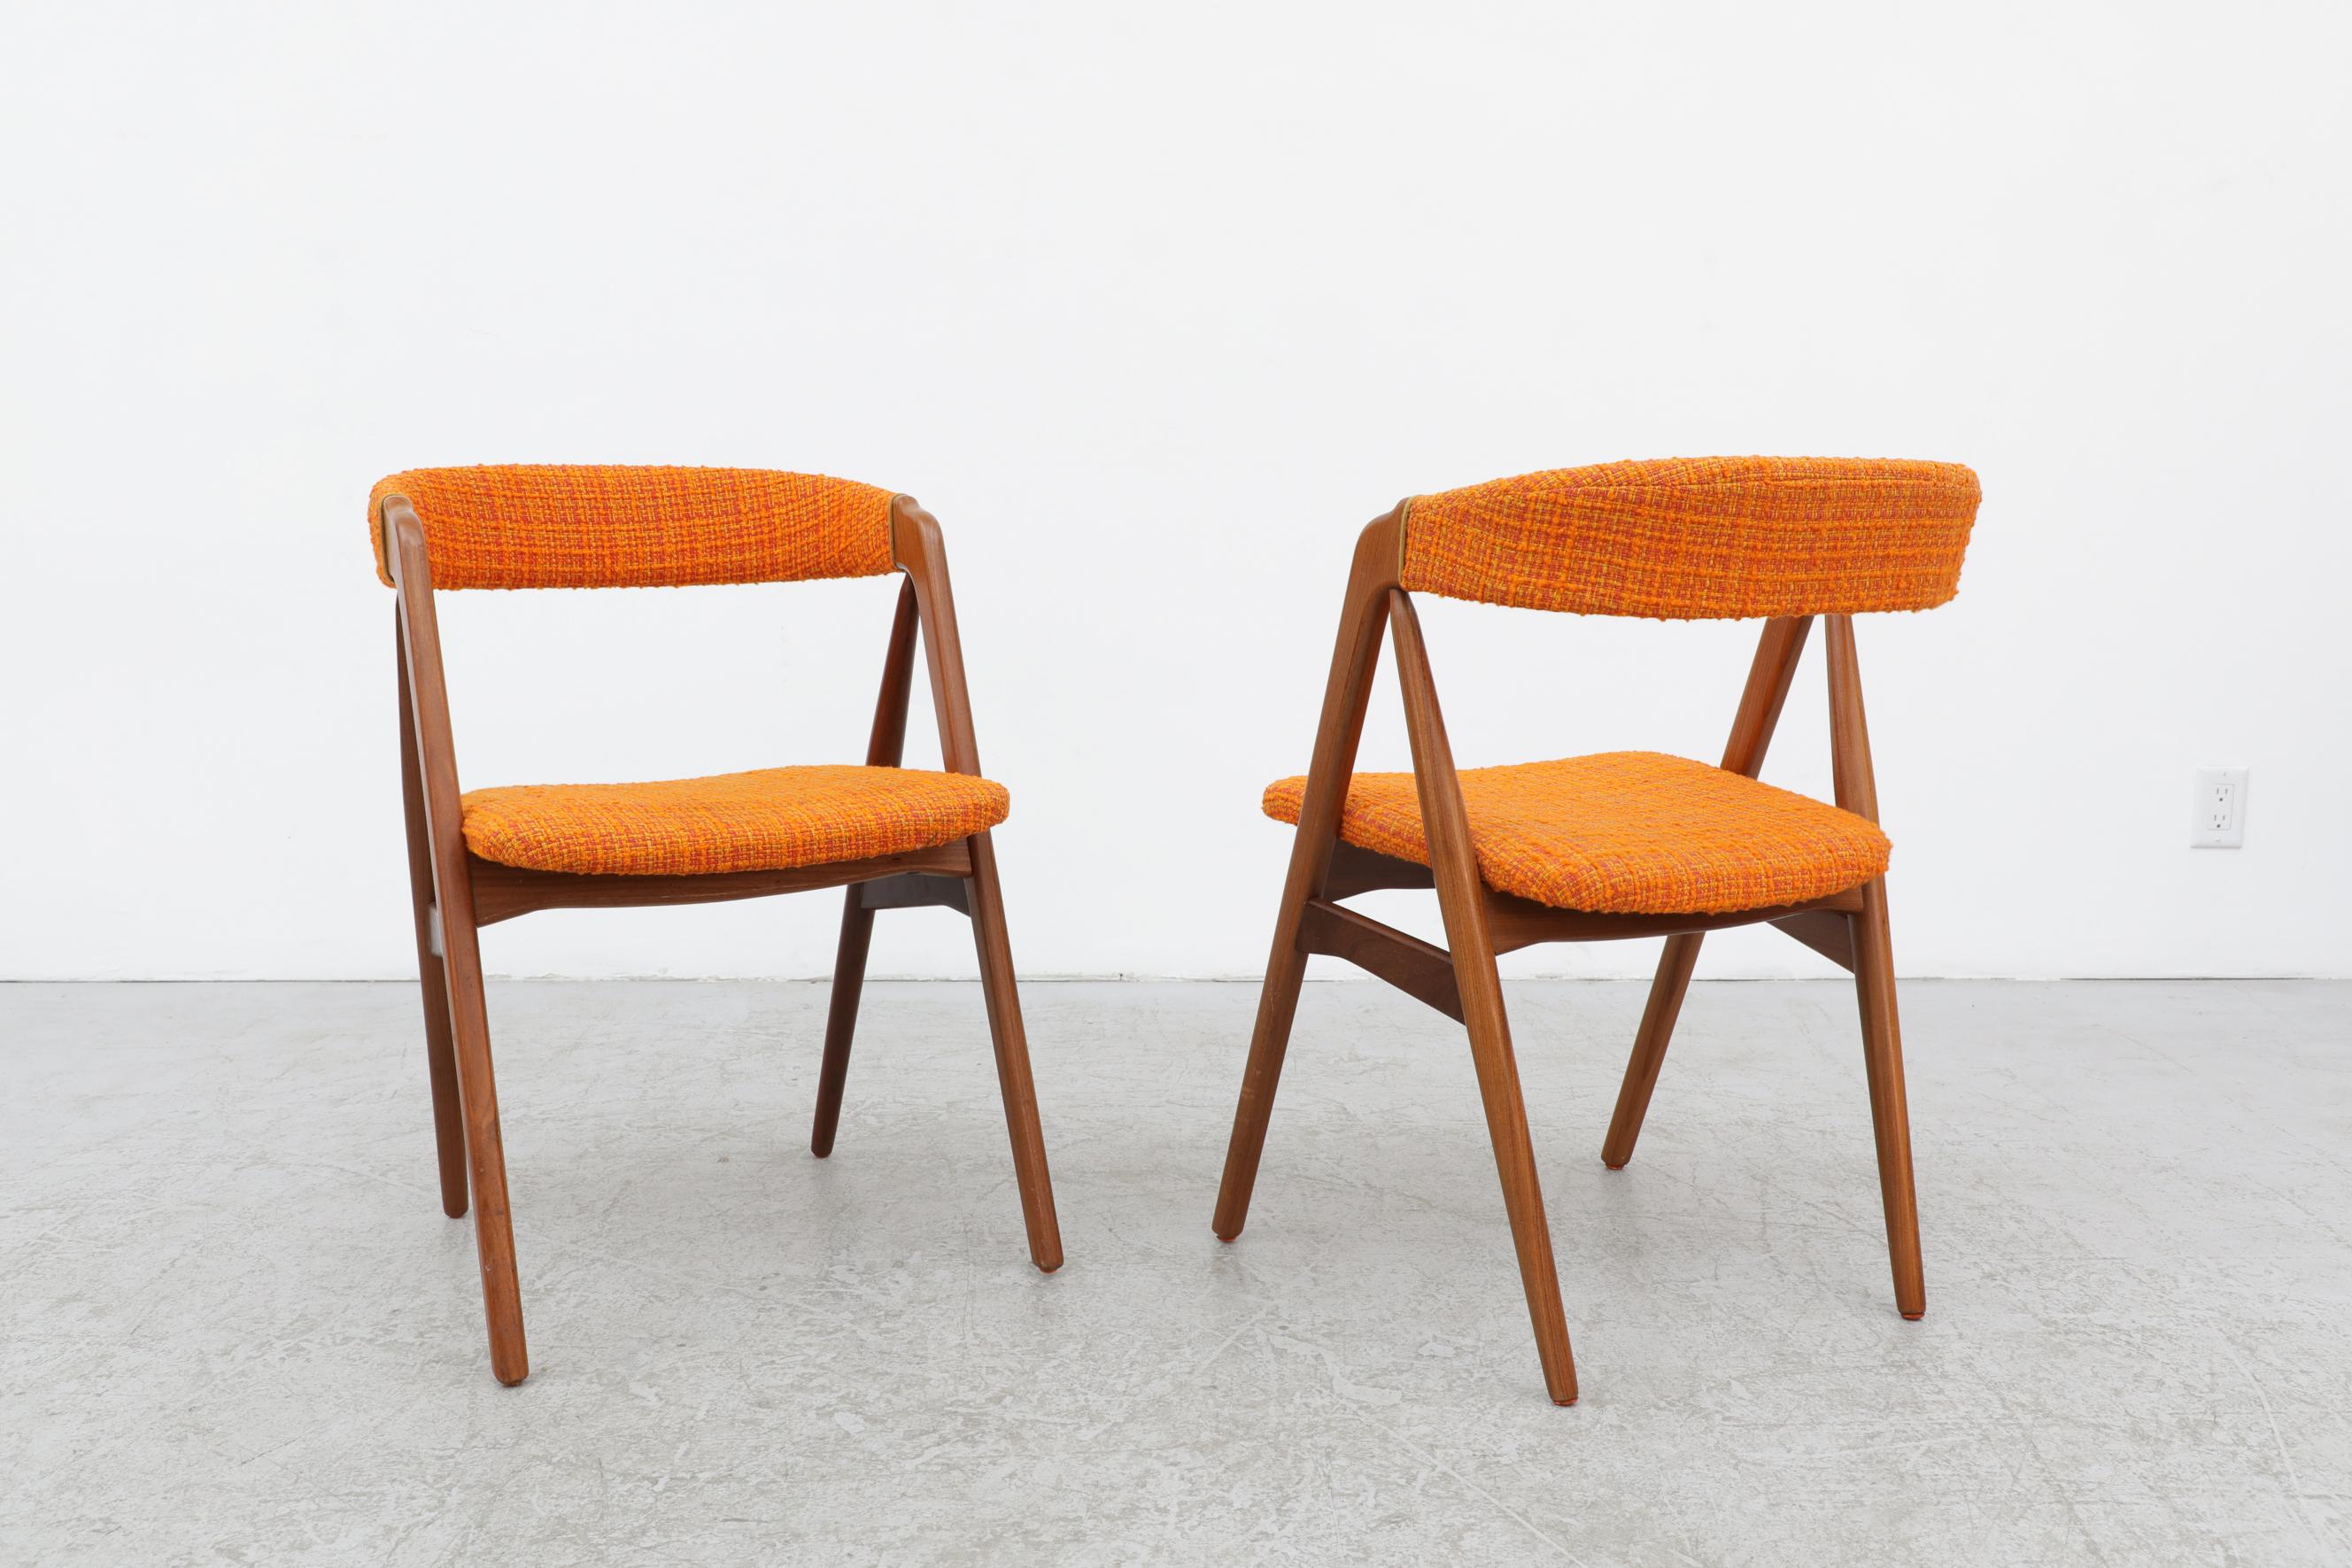 Pair of Kai Kristiansen Chairs with Original Orange Upholstered Seats 1